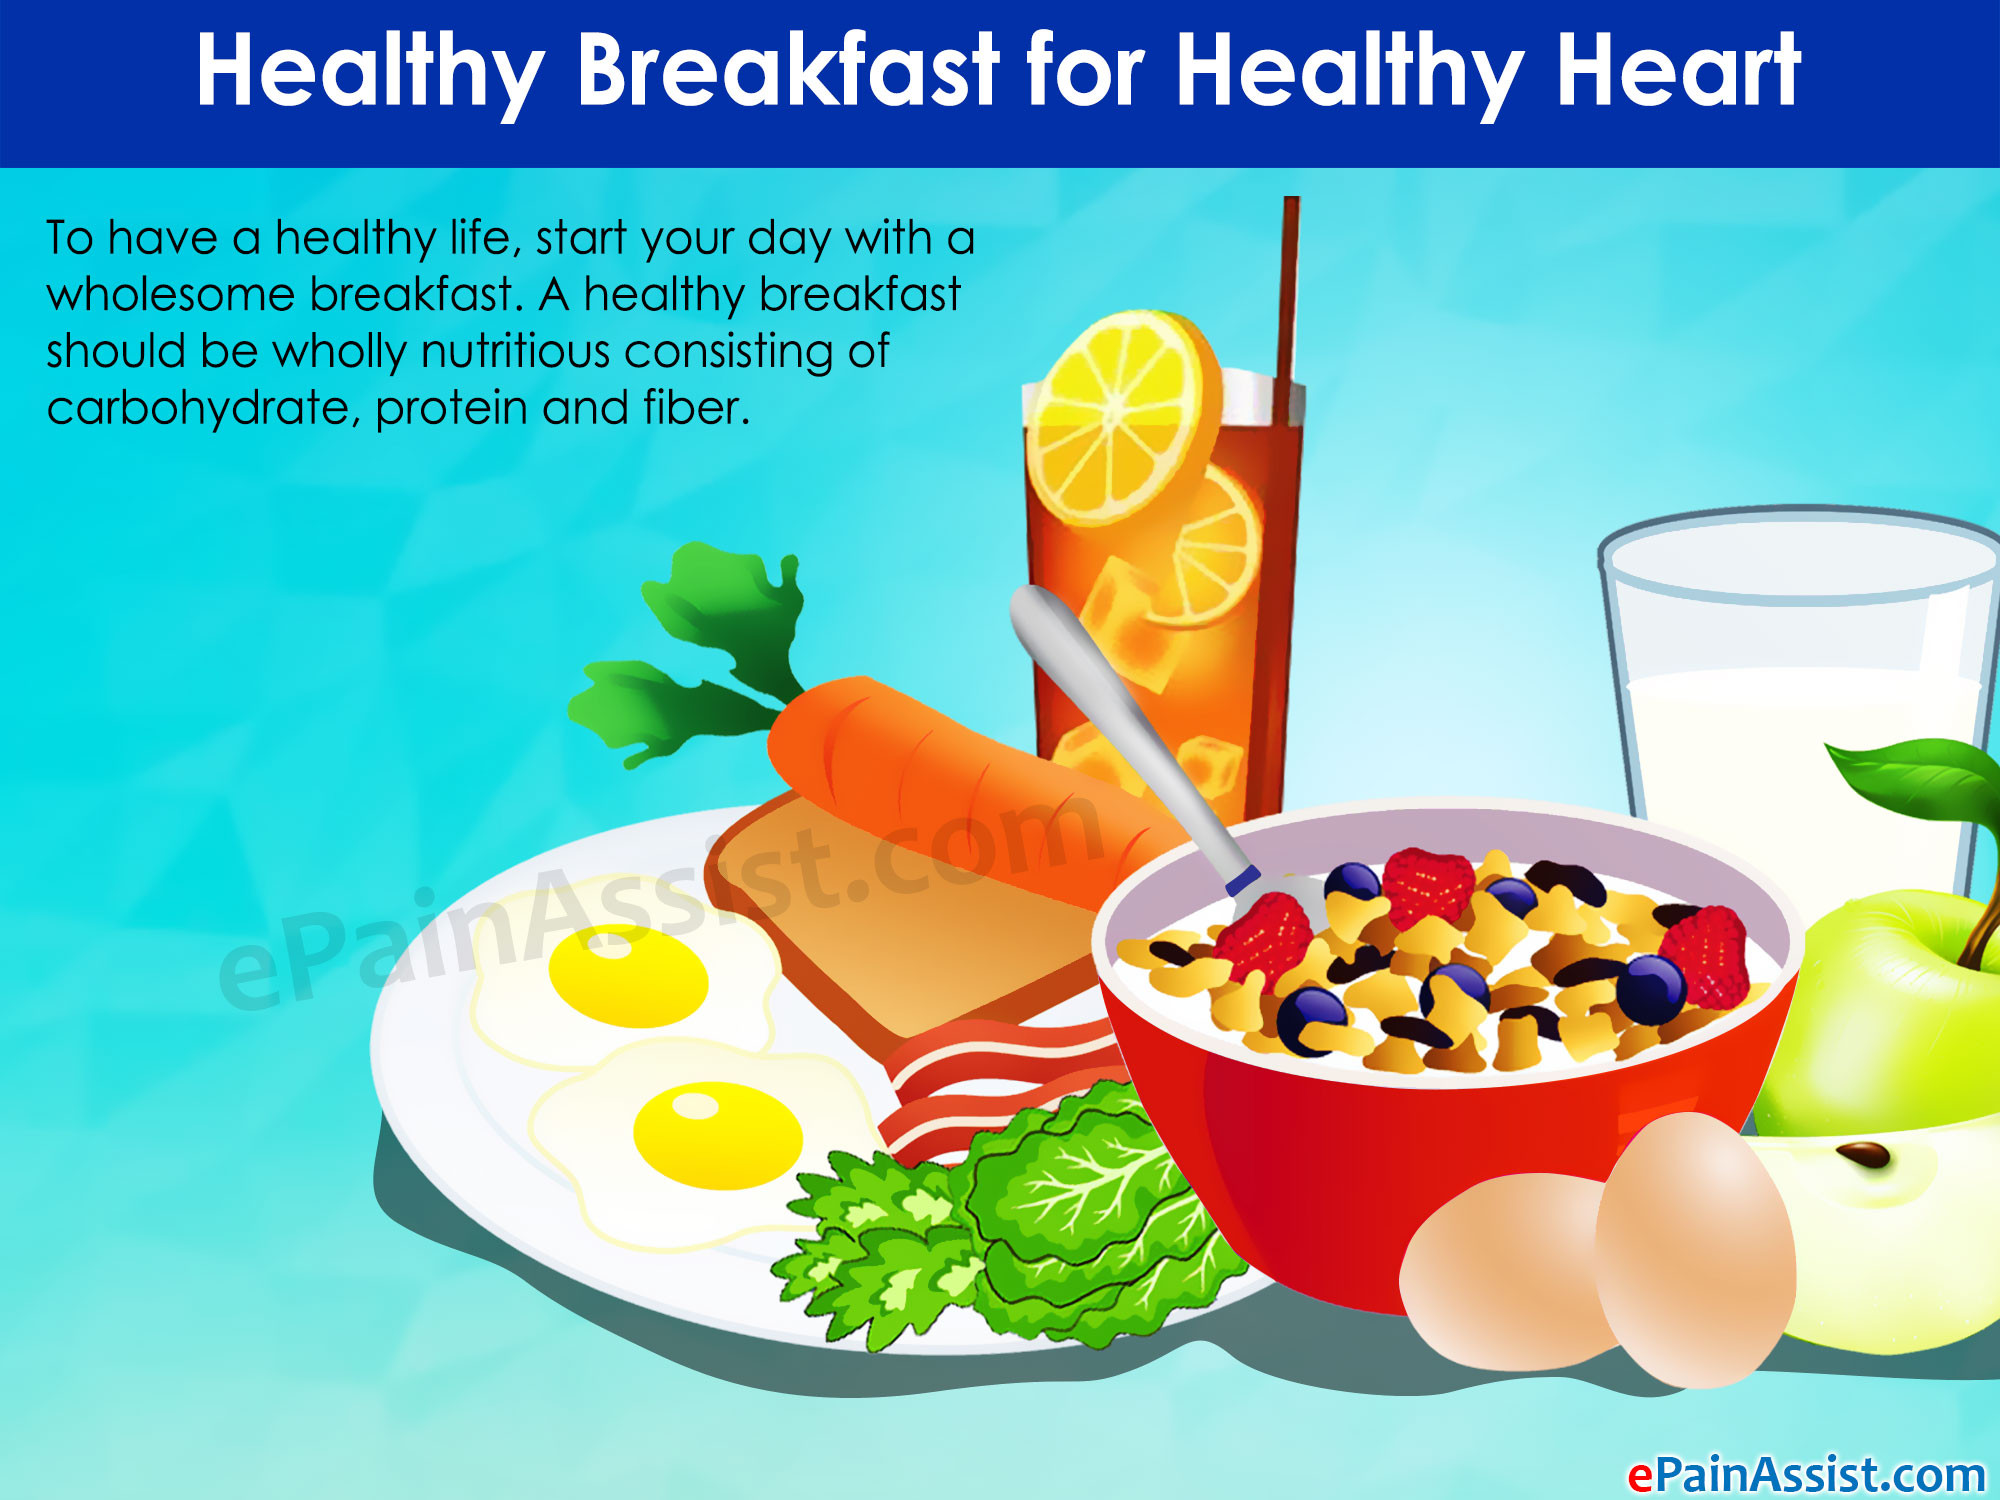 Healthy Breakfast Images
 Healthy Breakfast for Healthy Heart